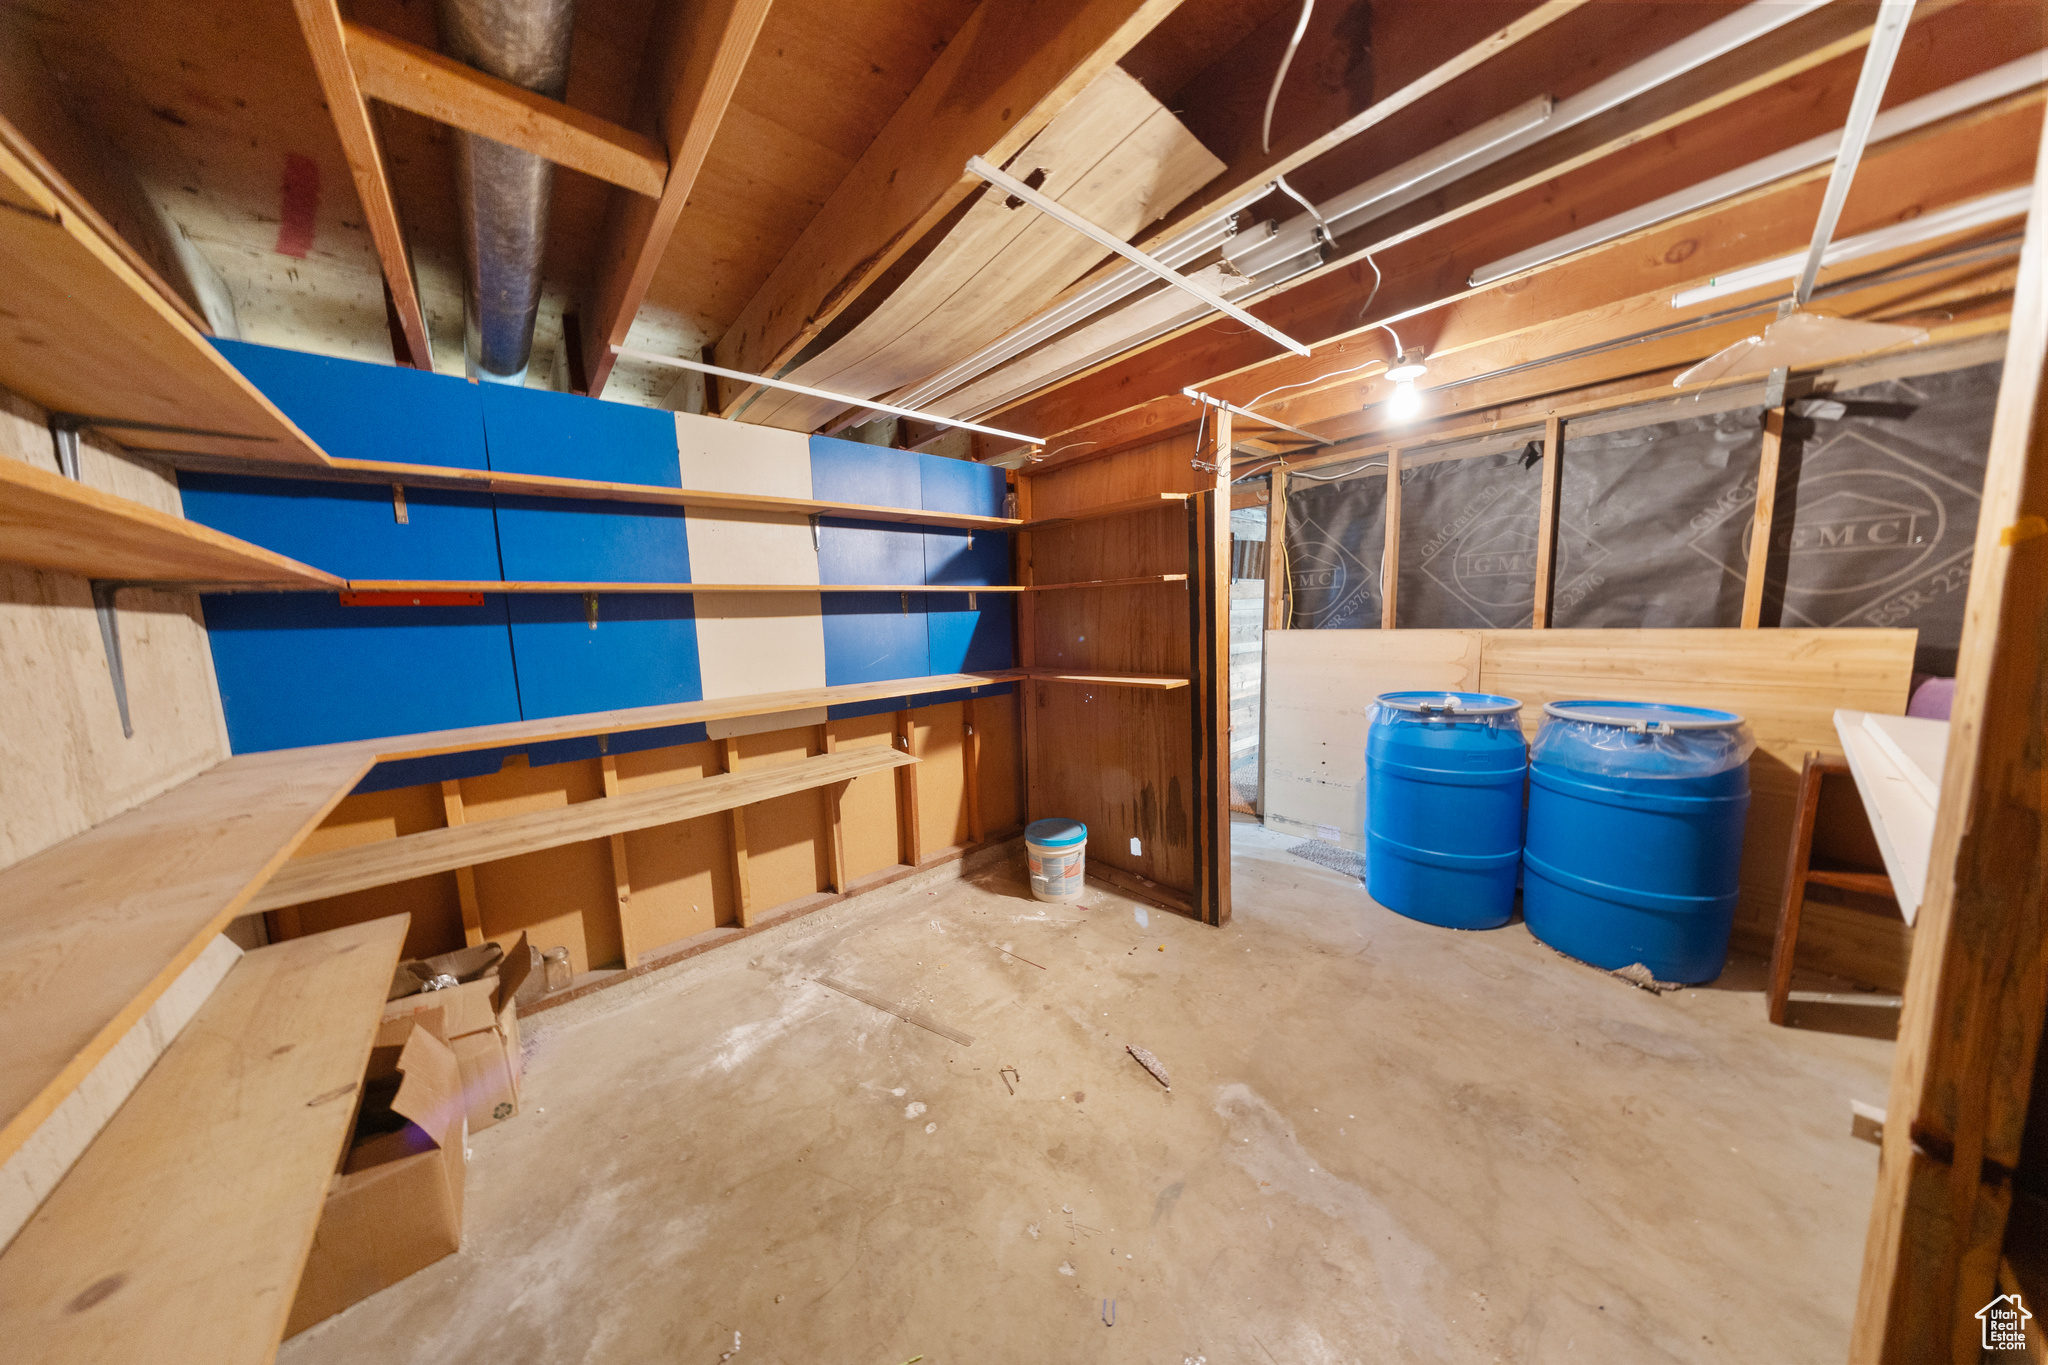 storage area in basement